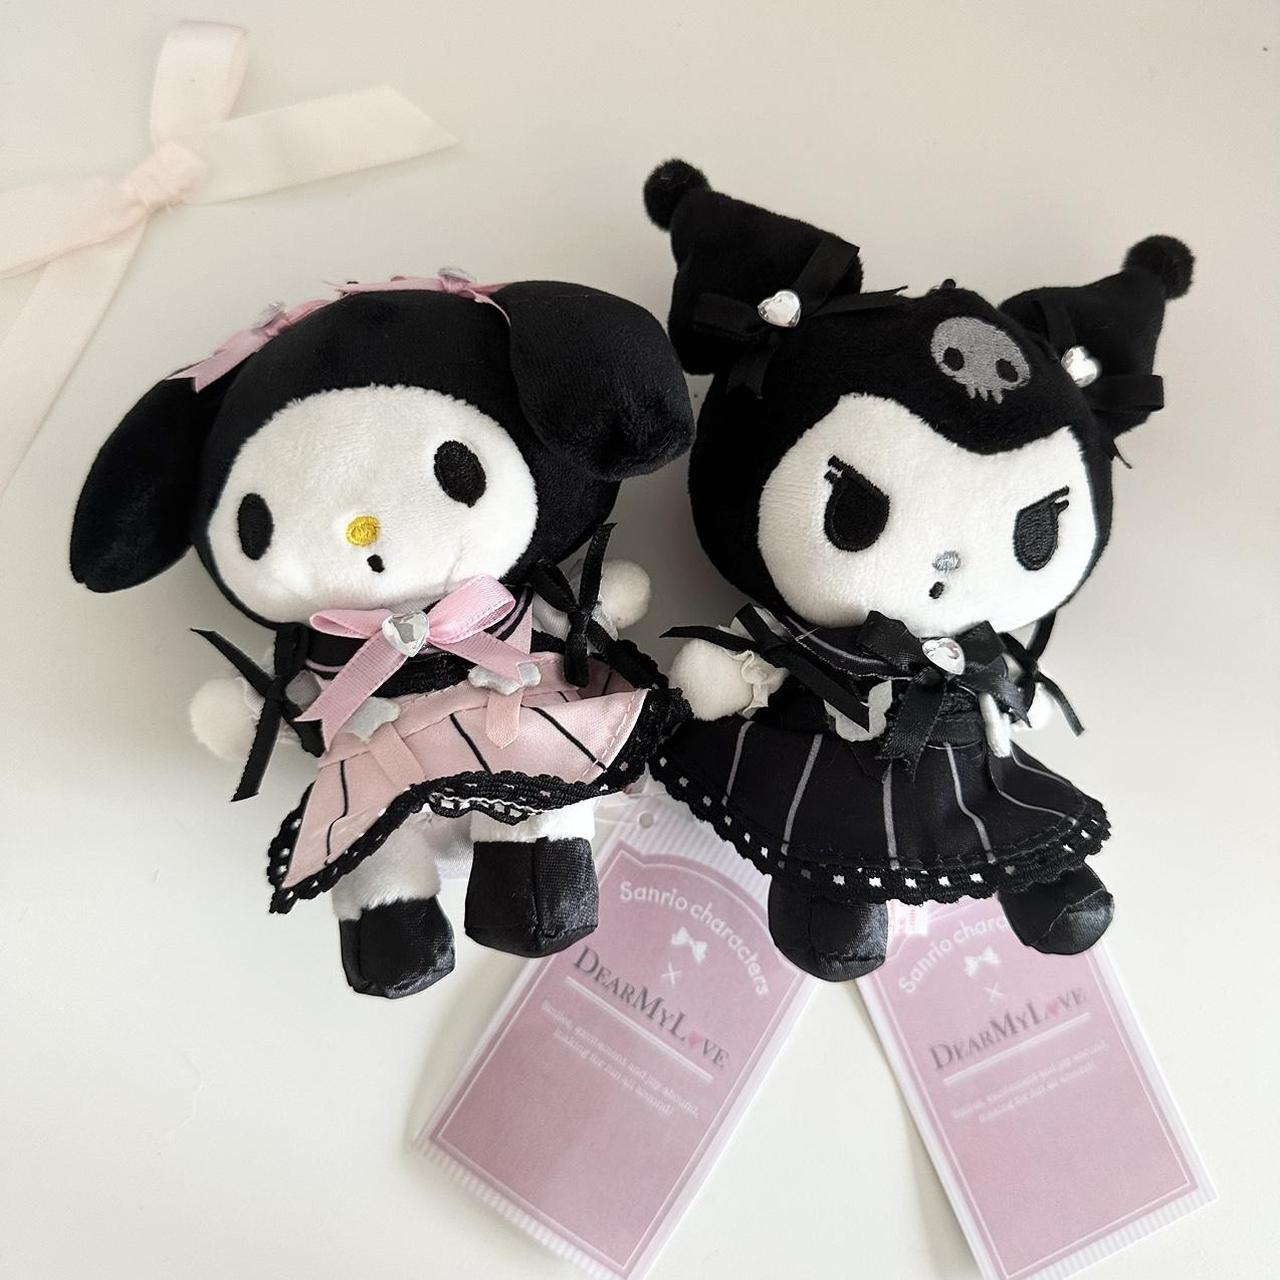 Black and Pink Stuffed-animals | Depop